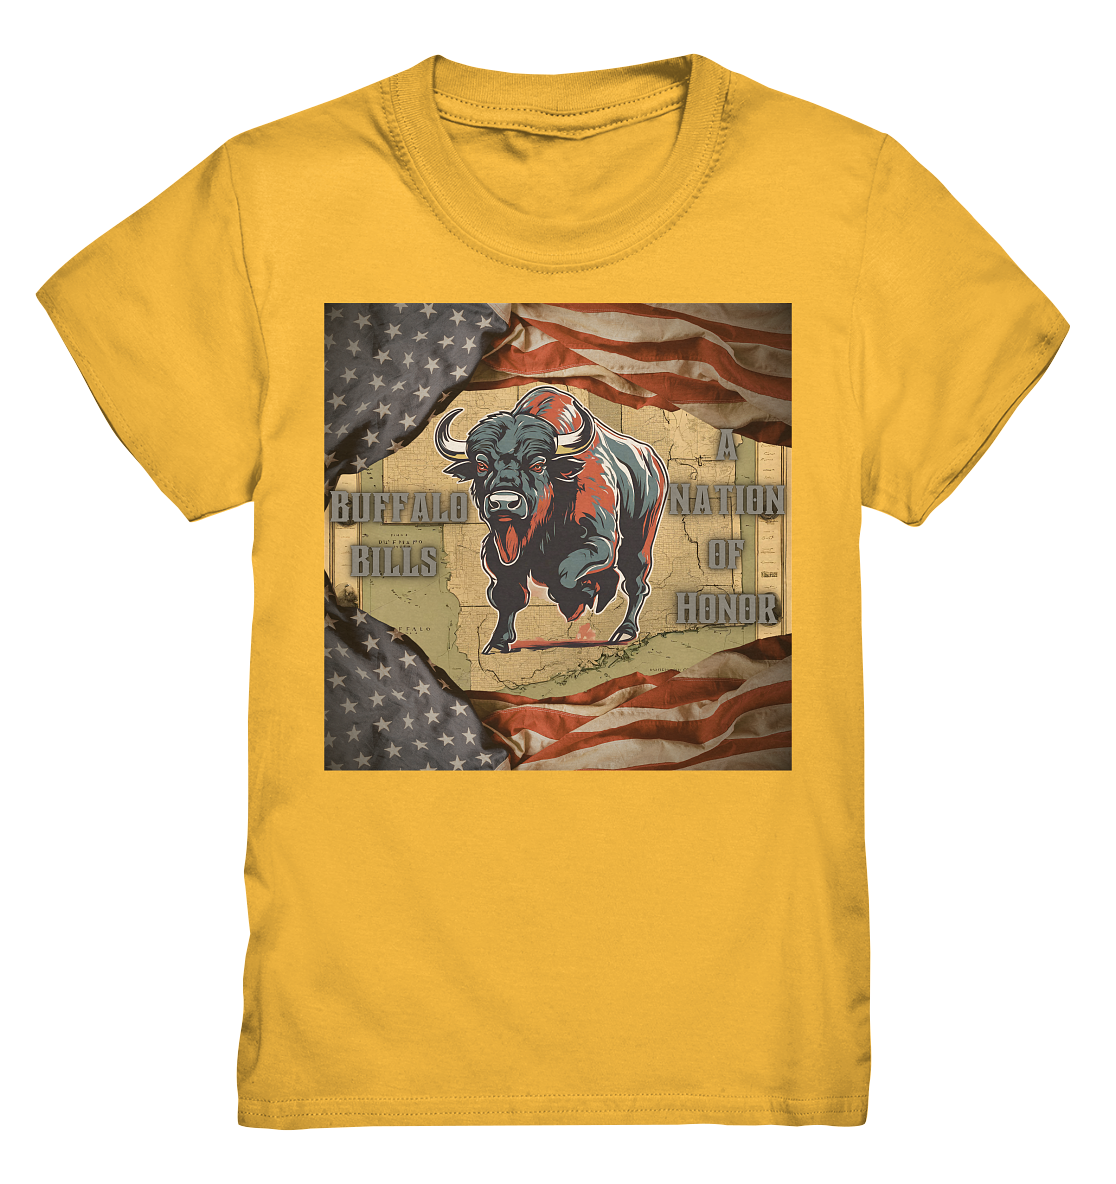 Buffalo Bills - A Nation of Honor - Kids Premium Shirt - Football Unity Football Unity